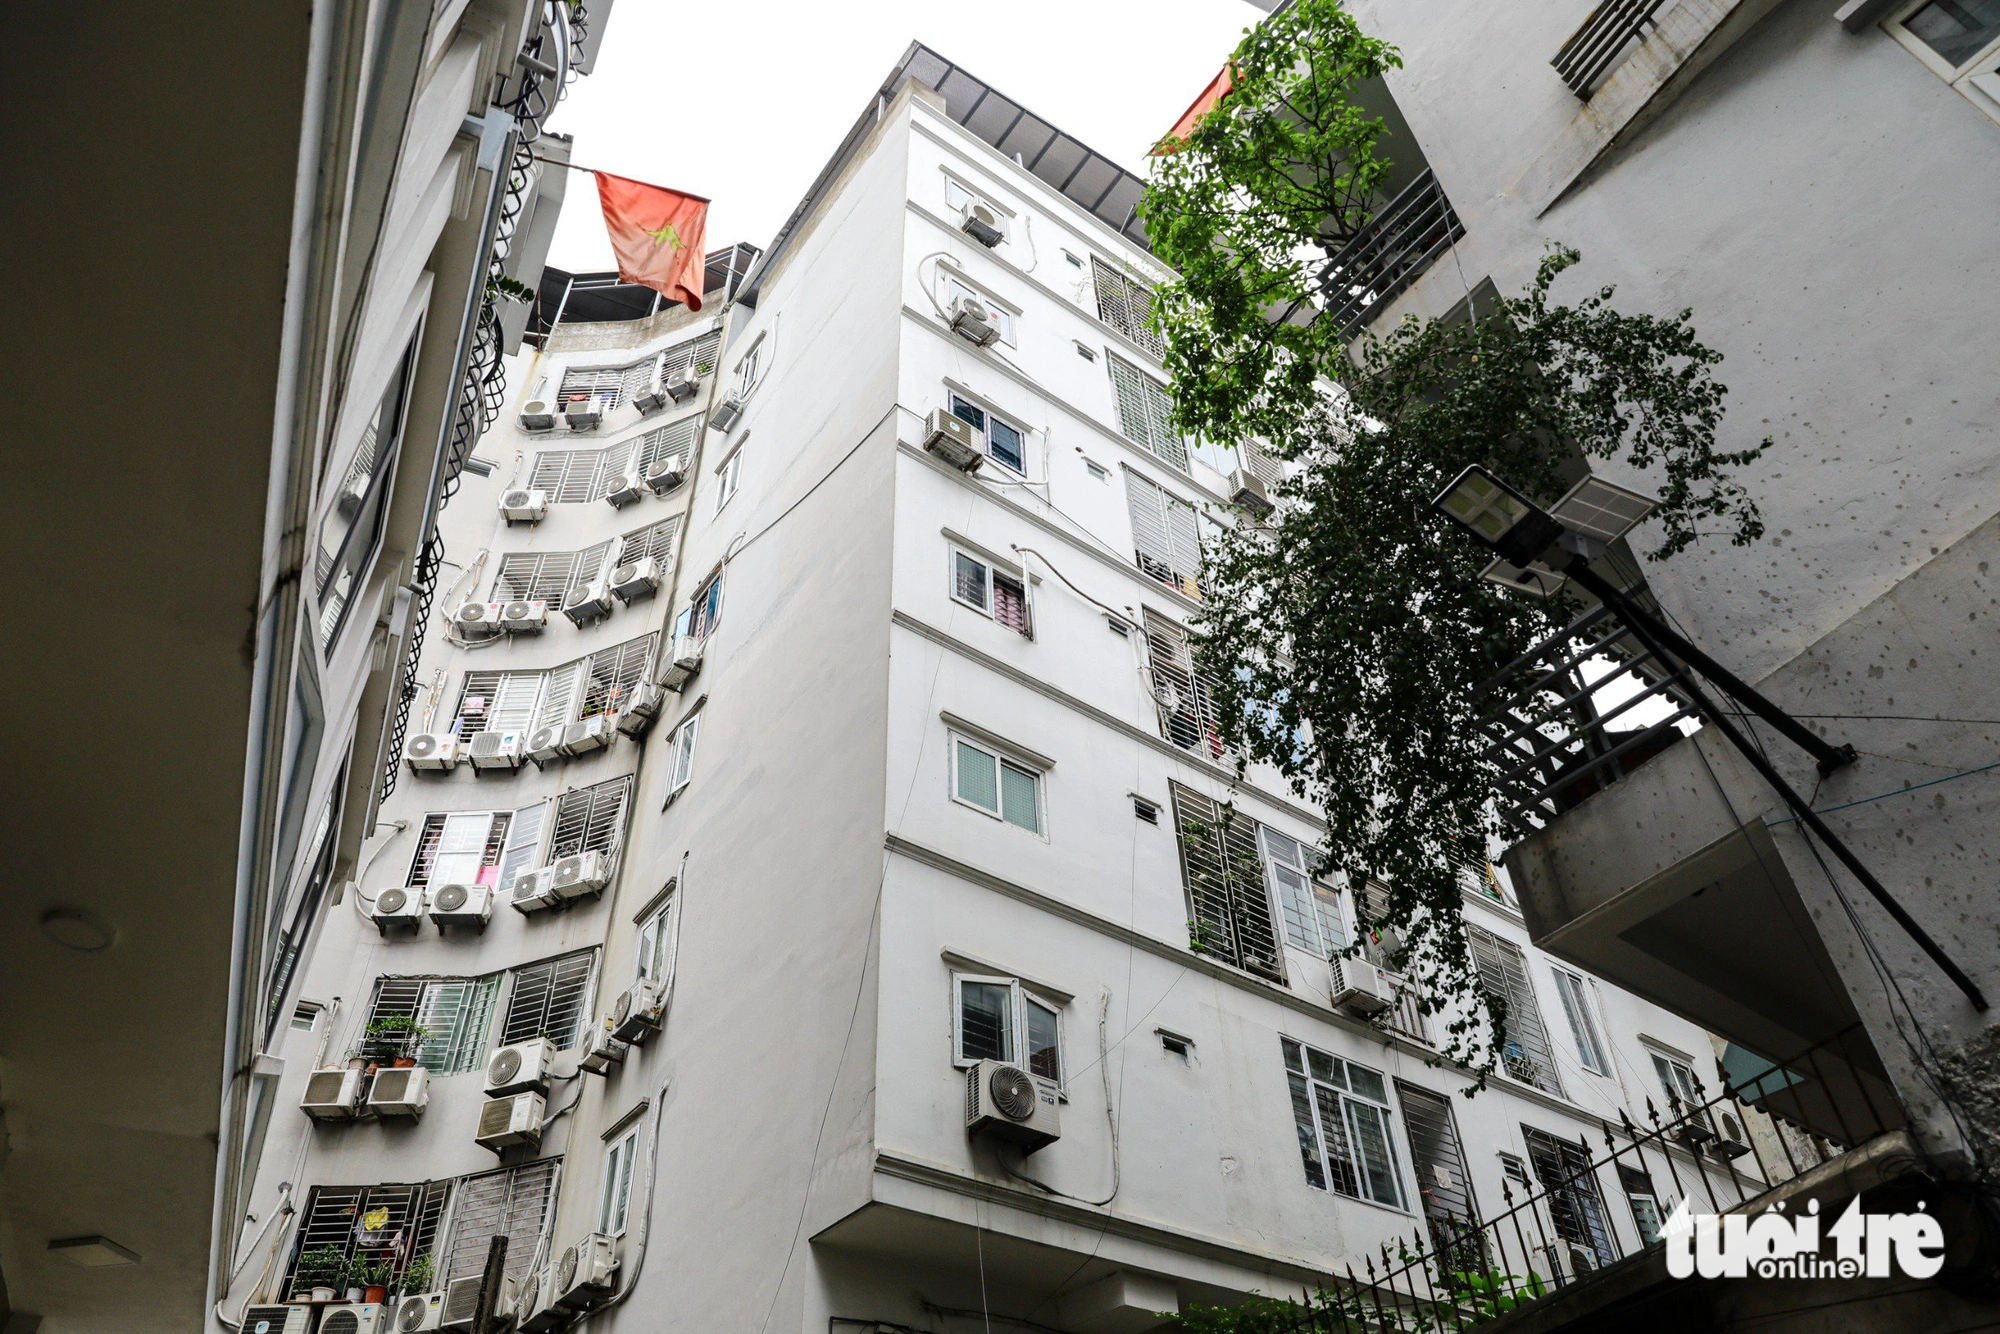 High-rise apartment blocks are popular in Hanoi. Photo: Danh Khang / Tuoi Tre